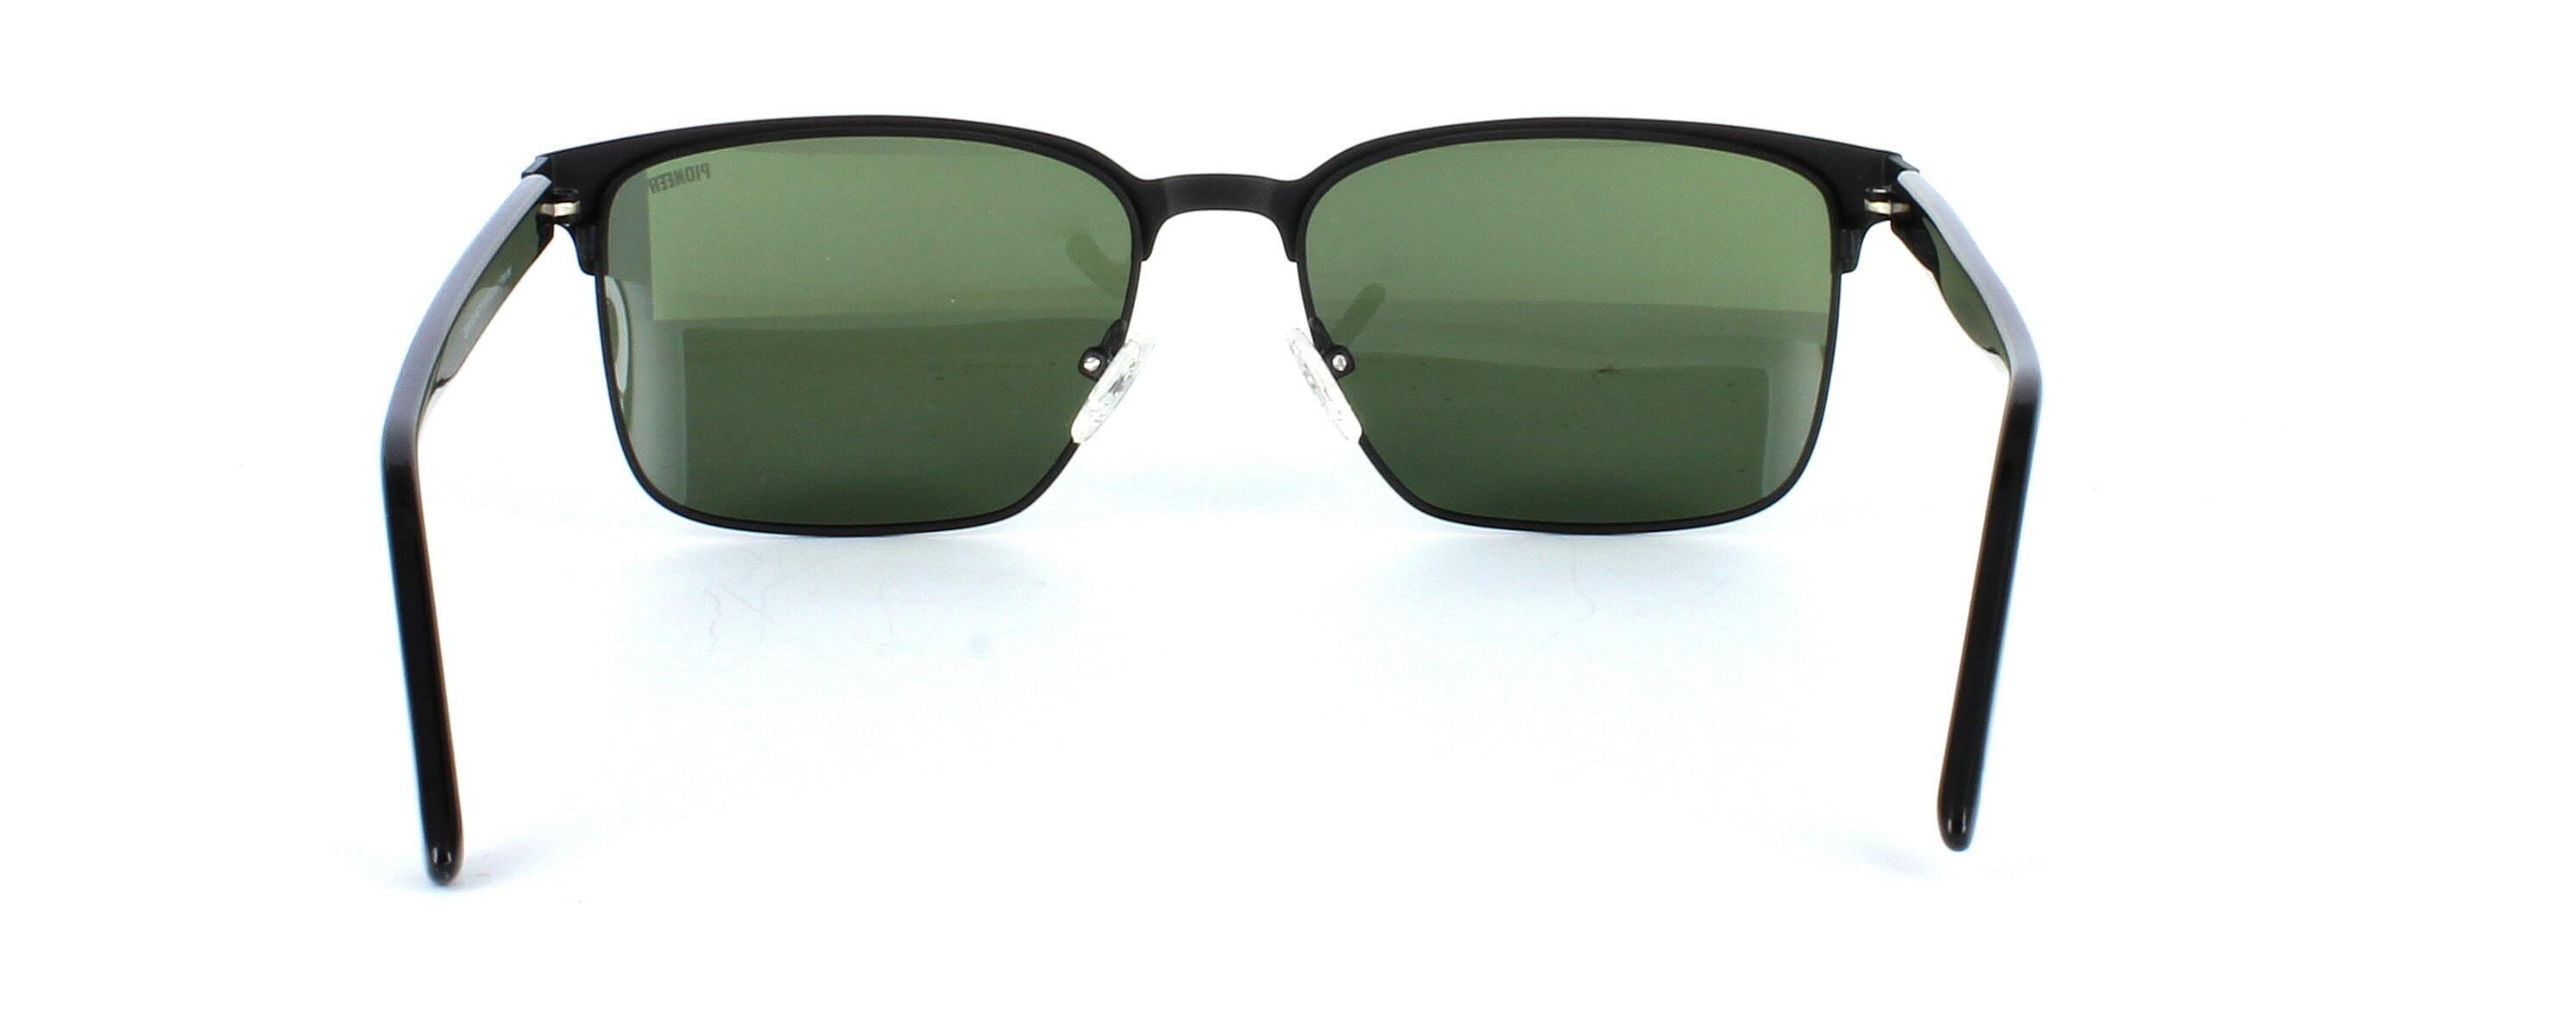 Sorrento - Unisex metal prescription sunglasses - Blue - Image view 4